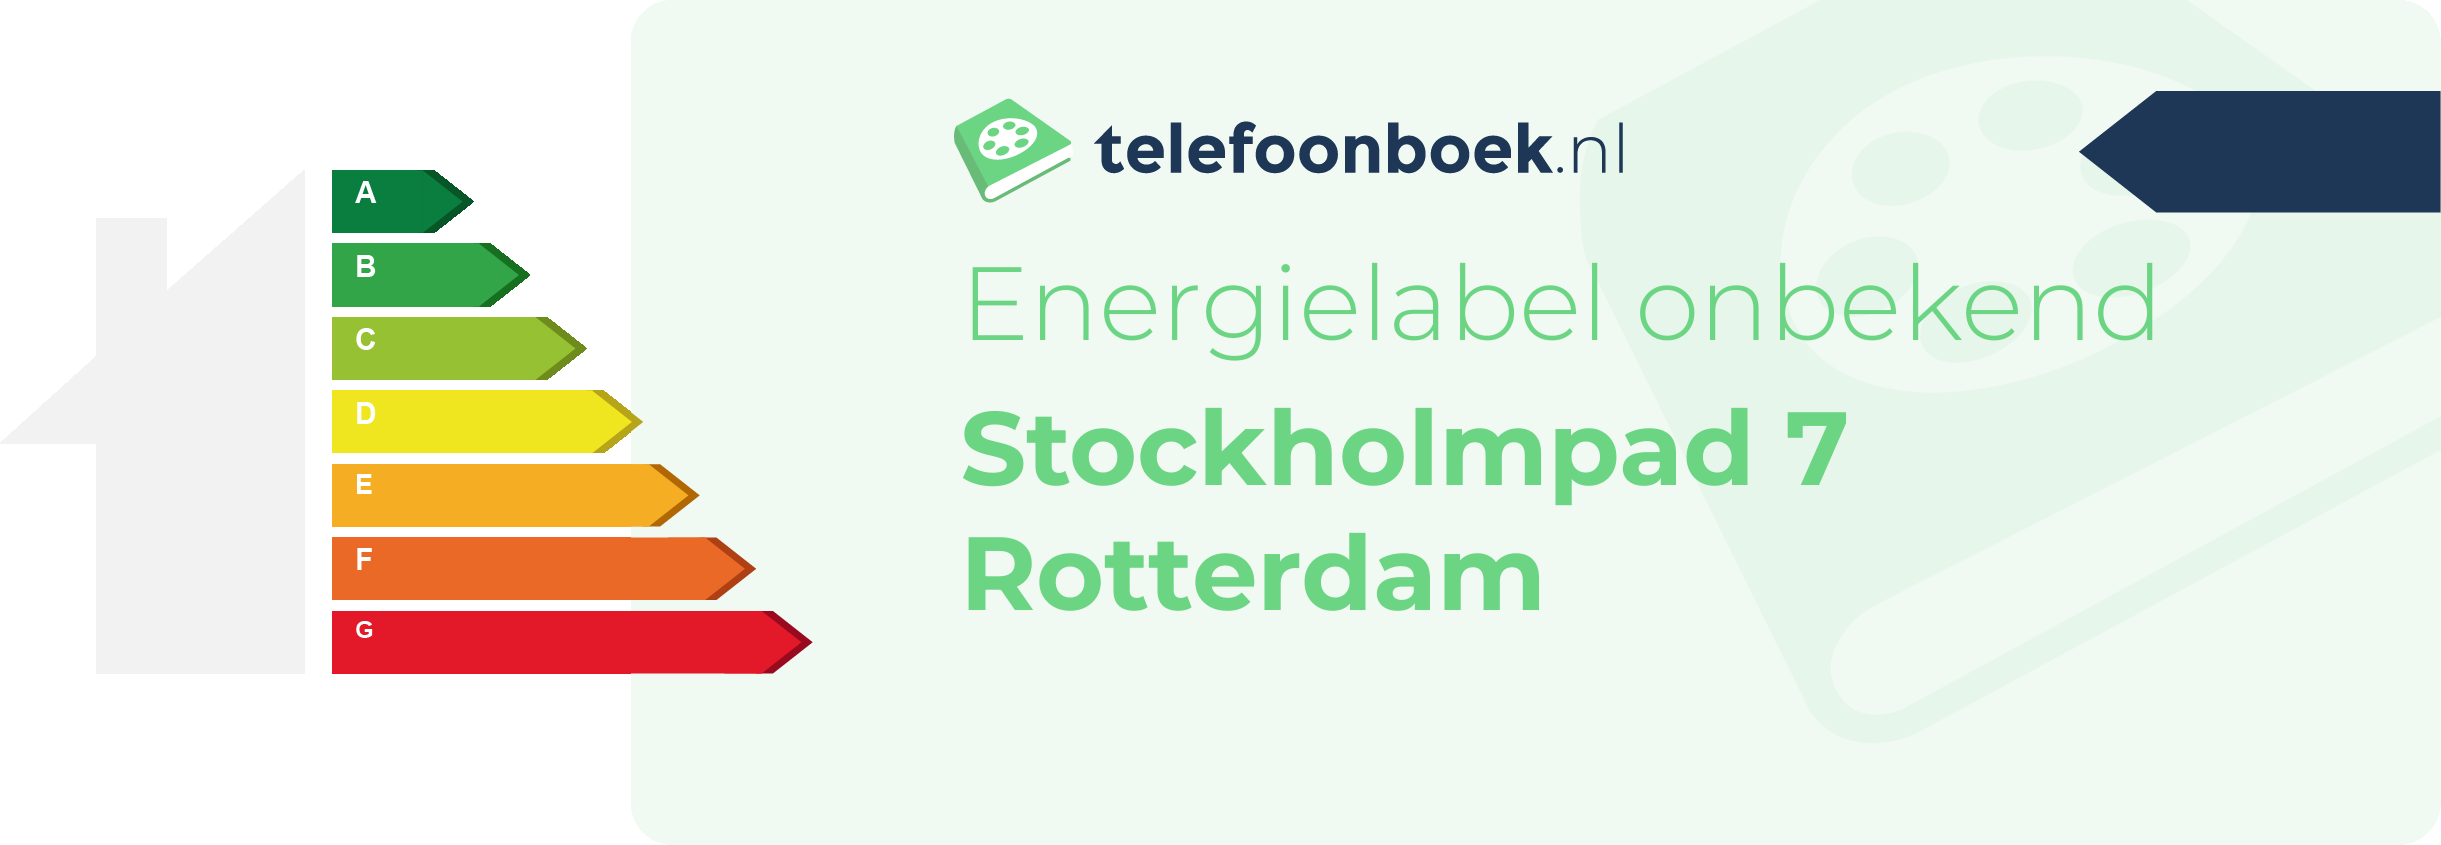 Energielabel Stockholmpad 7 Rotterdam